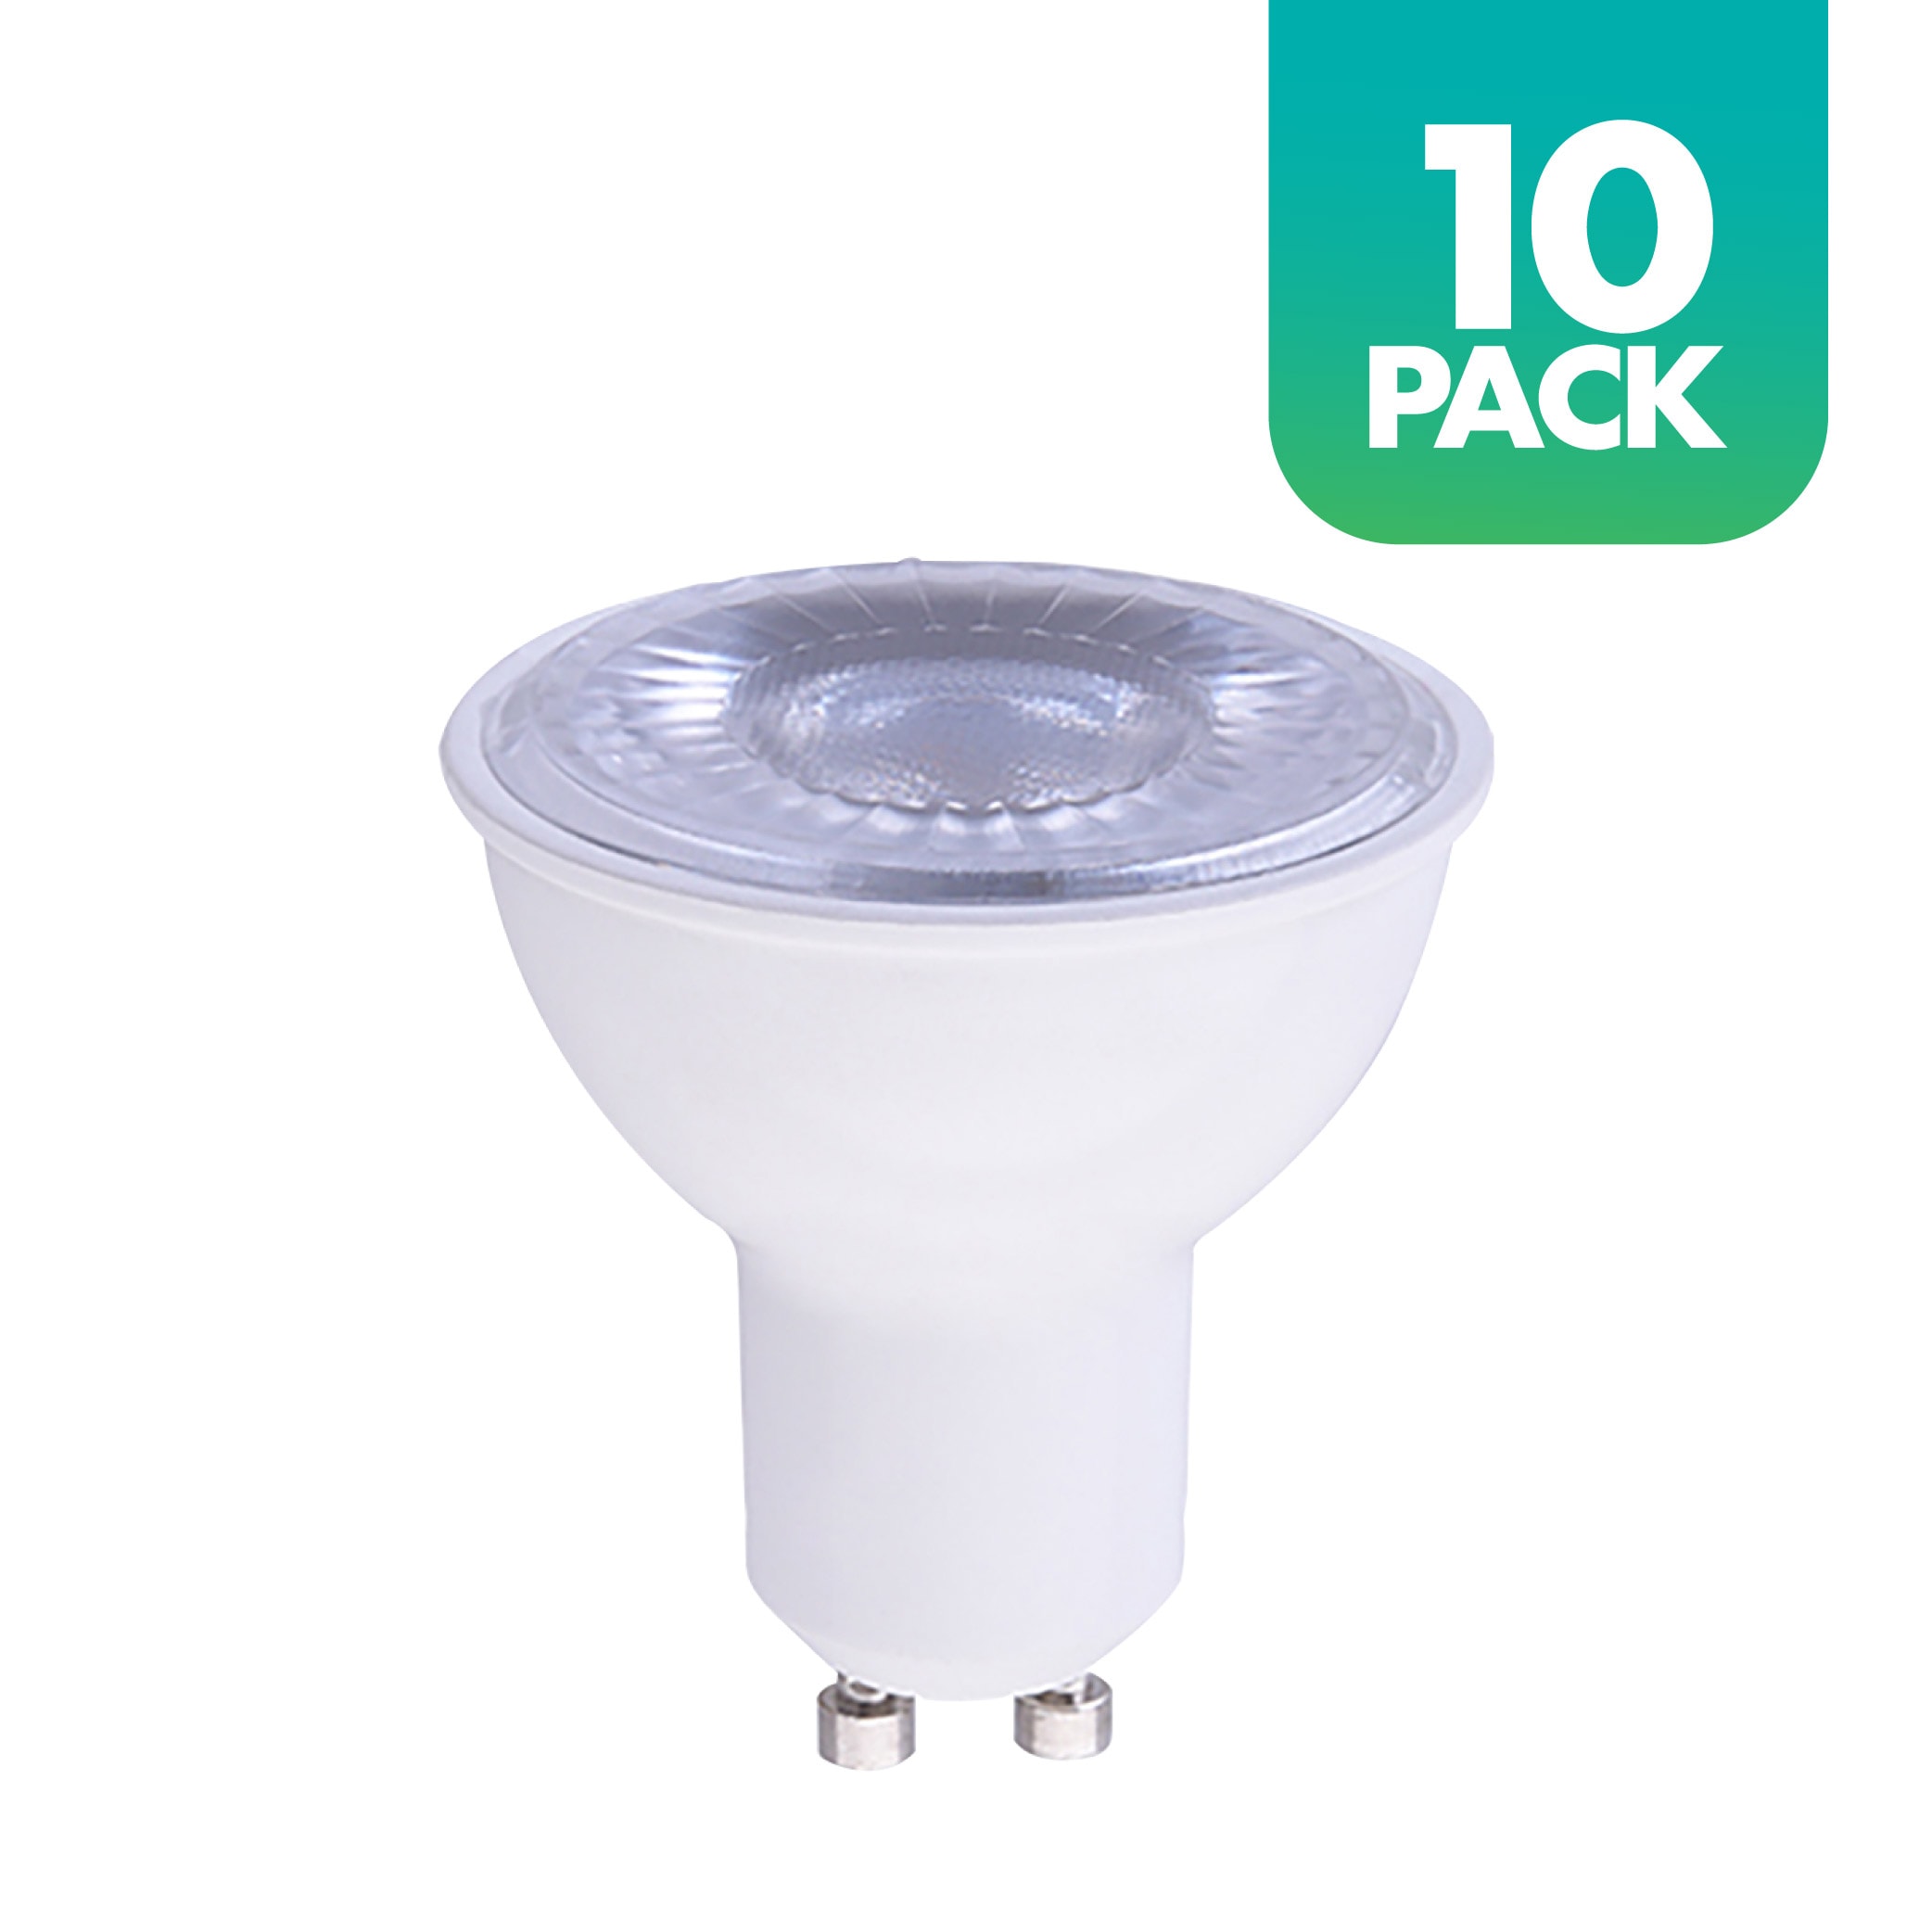 Simply Conserve ENERGY STAR GU10 50-watt EQ EQ LED Mr16 Soft White Gu10 Pin Base Dimmable Light Bulb (10-Pack) in the Spot & Flood LED Light Bulbs at Lowes.com